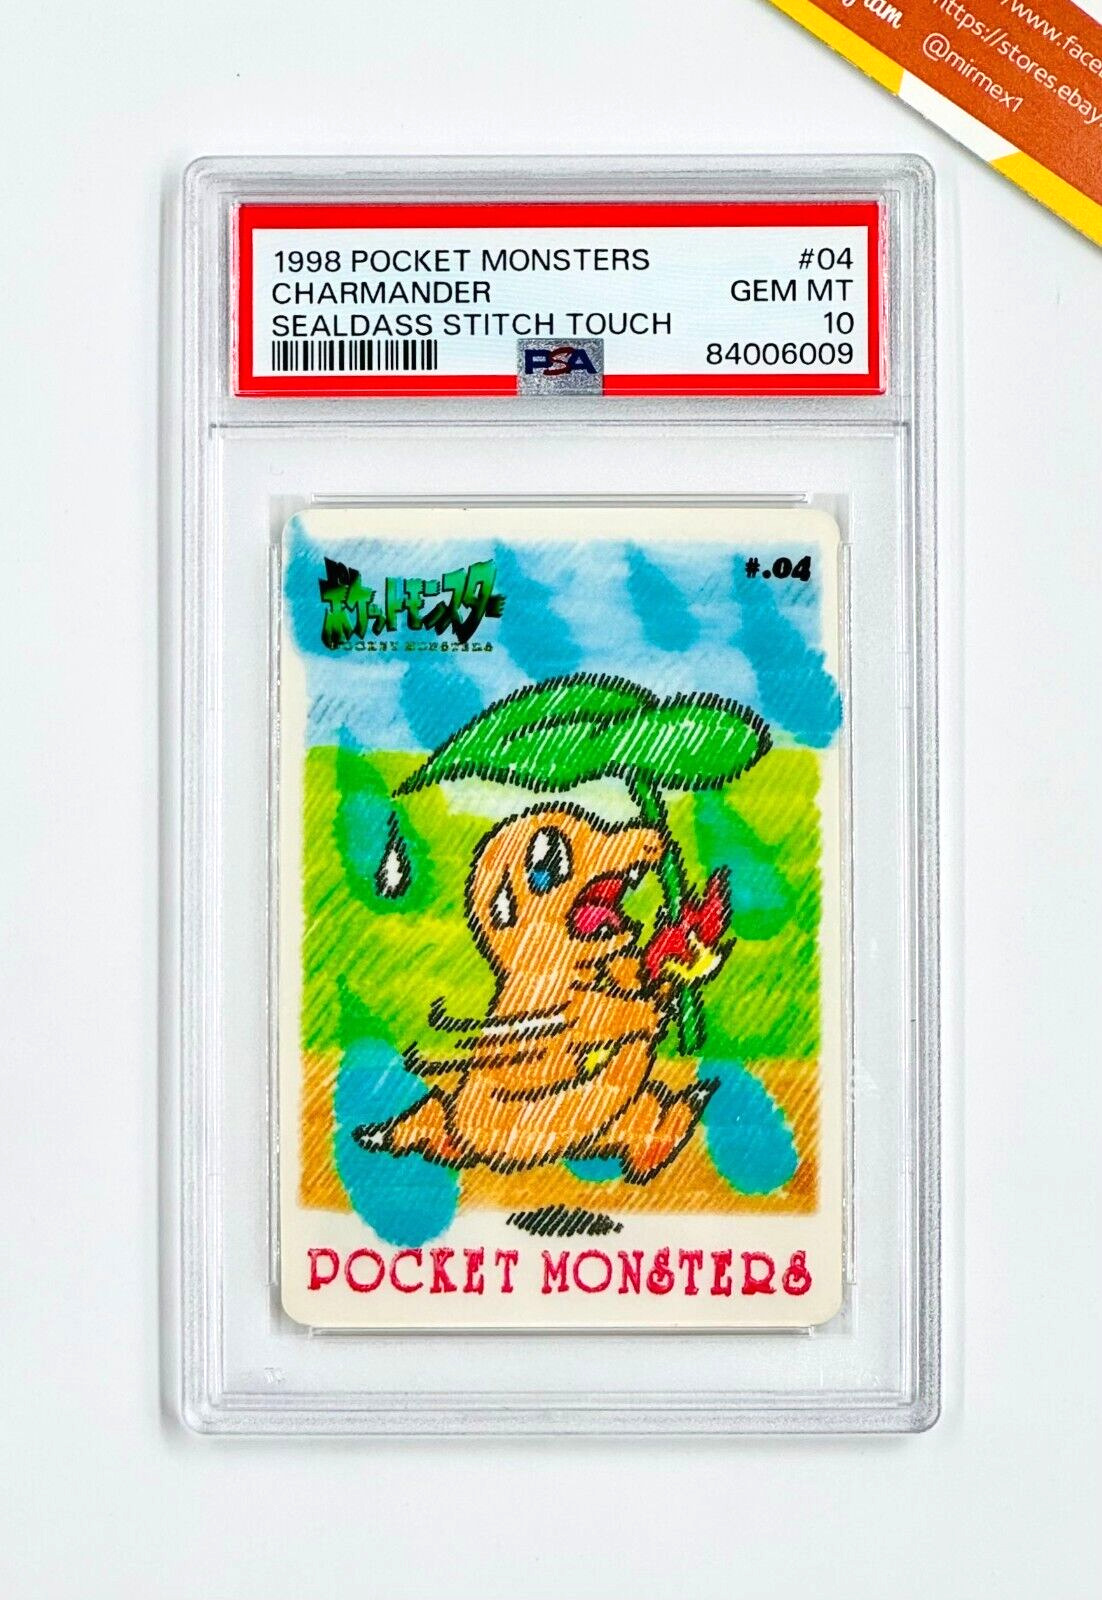 1998 Pokemon PSA 10 Charmander #04 Pocket Monsters Sealdass Stitch Touch Japan